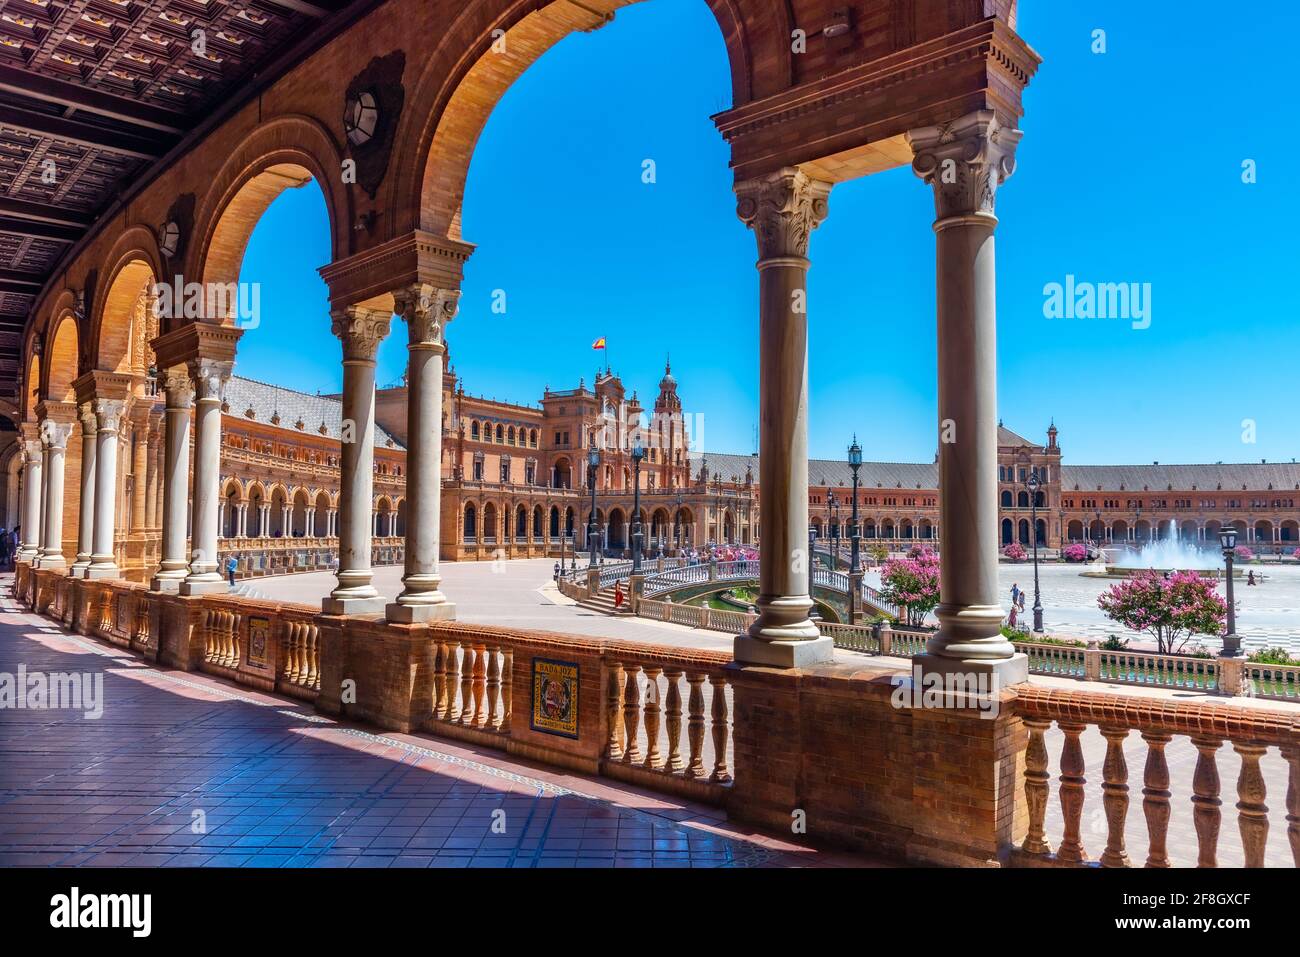 View of an arcade at Plaza de Espana in Sevilla, Spain Stock Photo